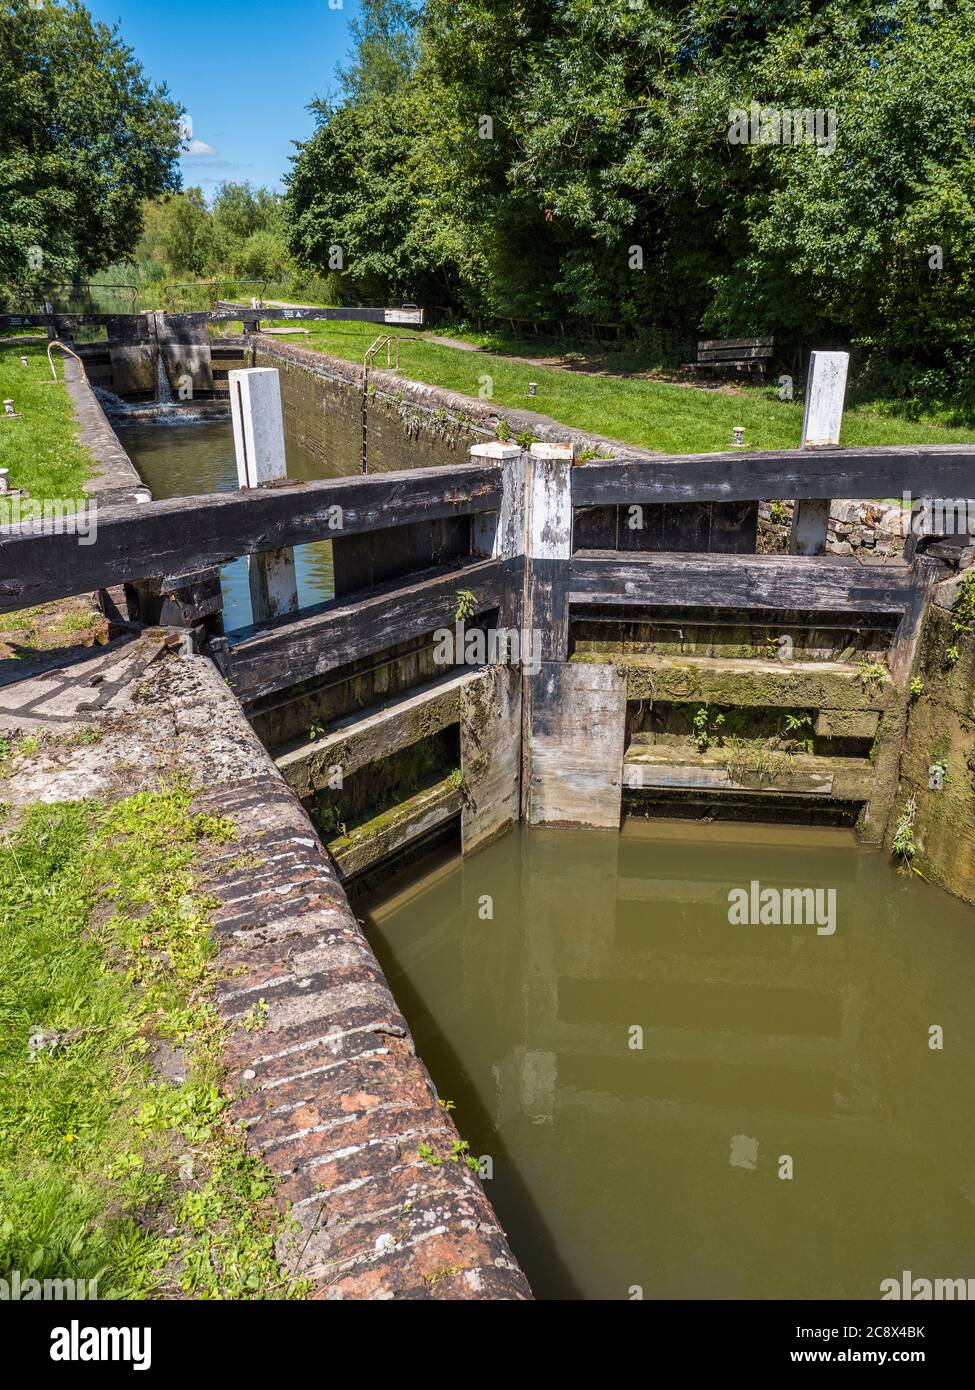 Brusdens Lock, Kennett et Avon Canal, Kintbury, Berkshire, Angleterre, Royaume-Uni, GB. Banque D'Images